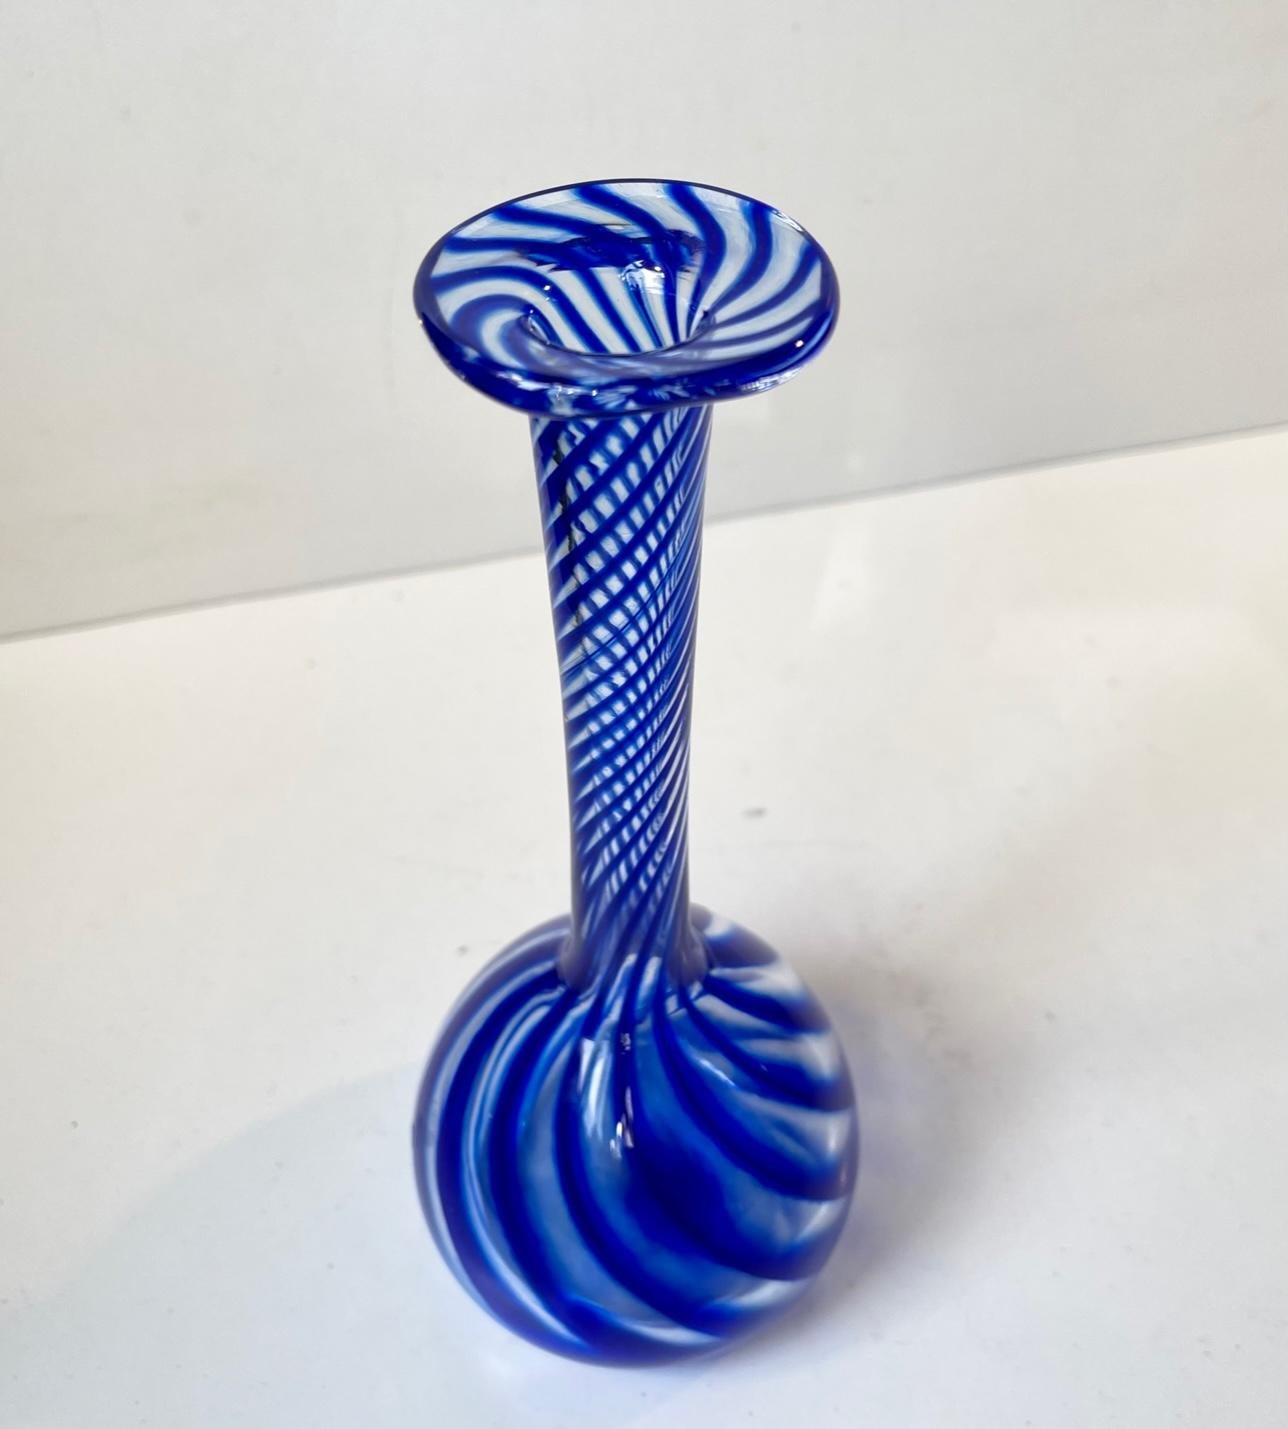 A handblown long-neck art glass vase in cobalt blue and clear. It is called Solitaire (Da: Solitær) and was made by glass artist Martin Birk Møller in his workshop Glashütten in Nykøbing Sjælland Denmark. The paper sticker is still present to the